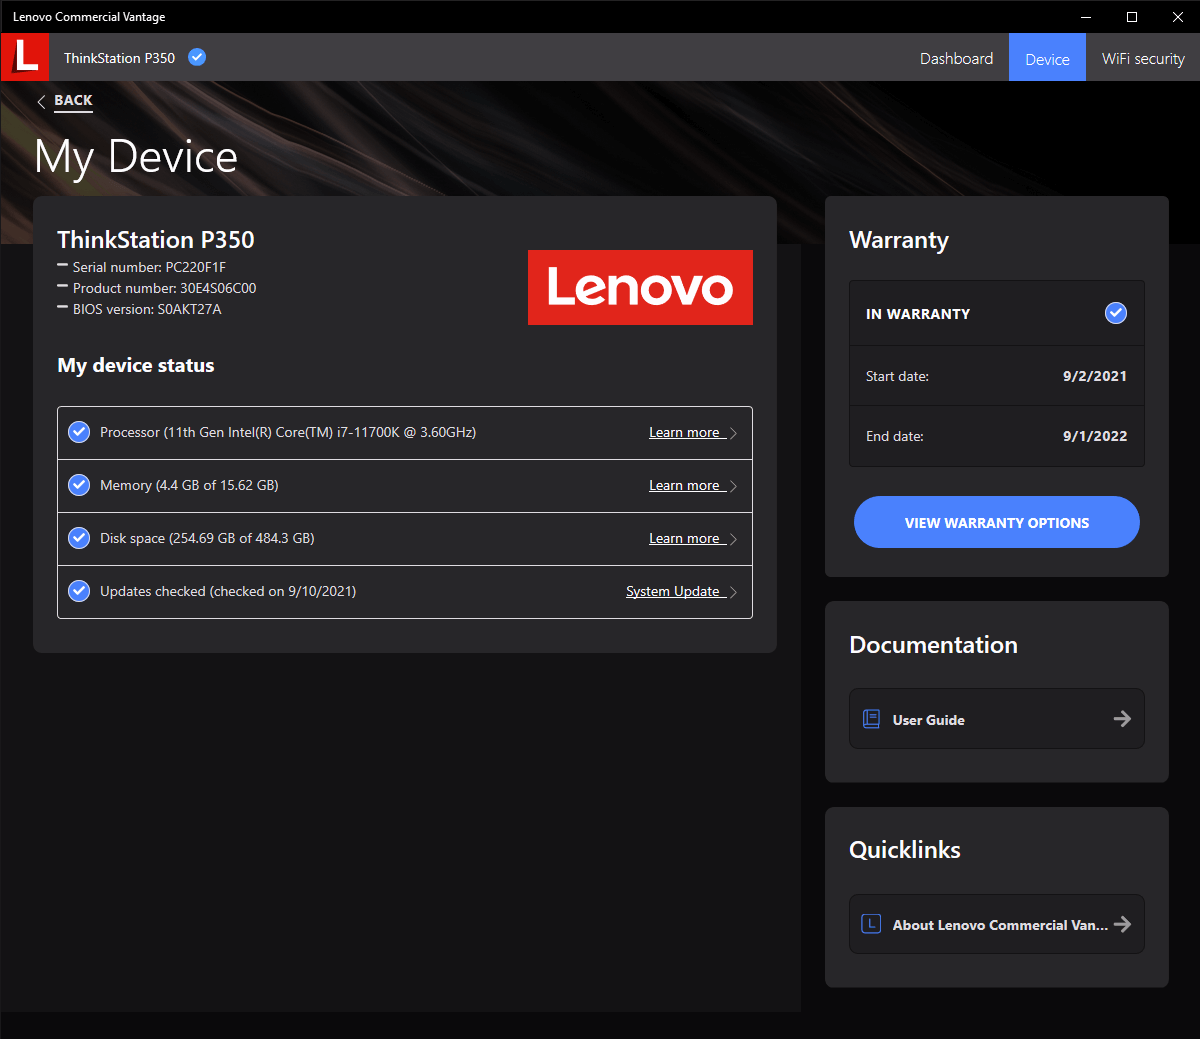 Lenovo Commercial Vantage 9 13 2021 9 35 52 AM